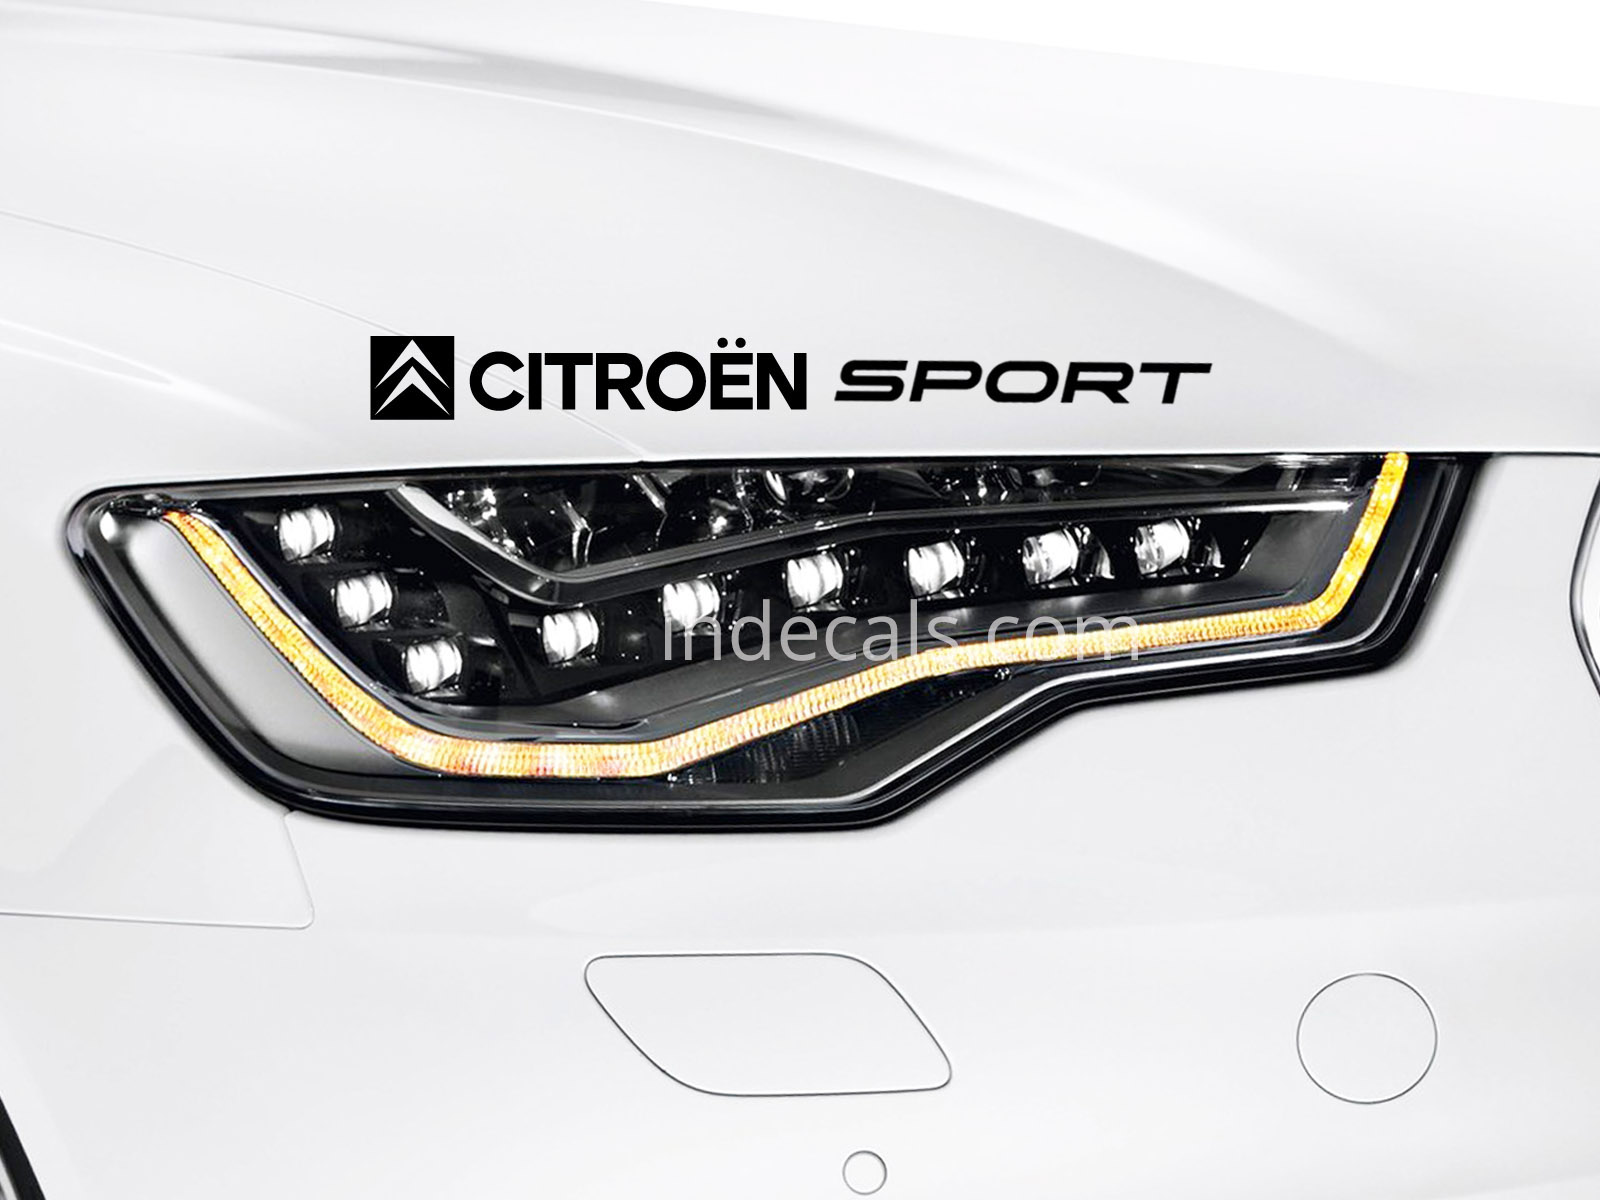 1 x Citroen Sport Sticker - Black